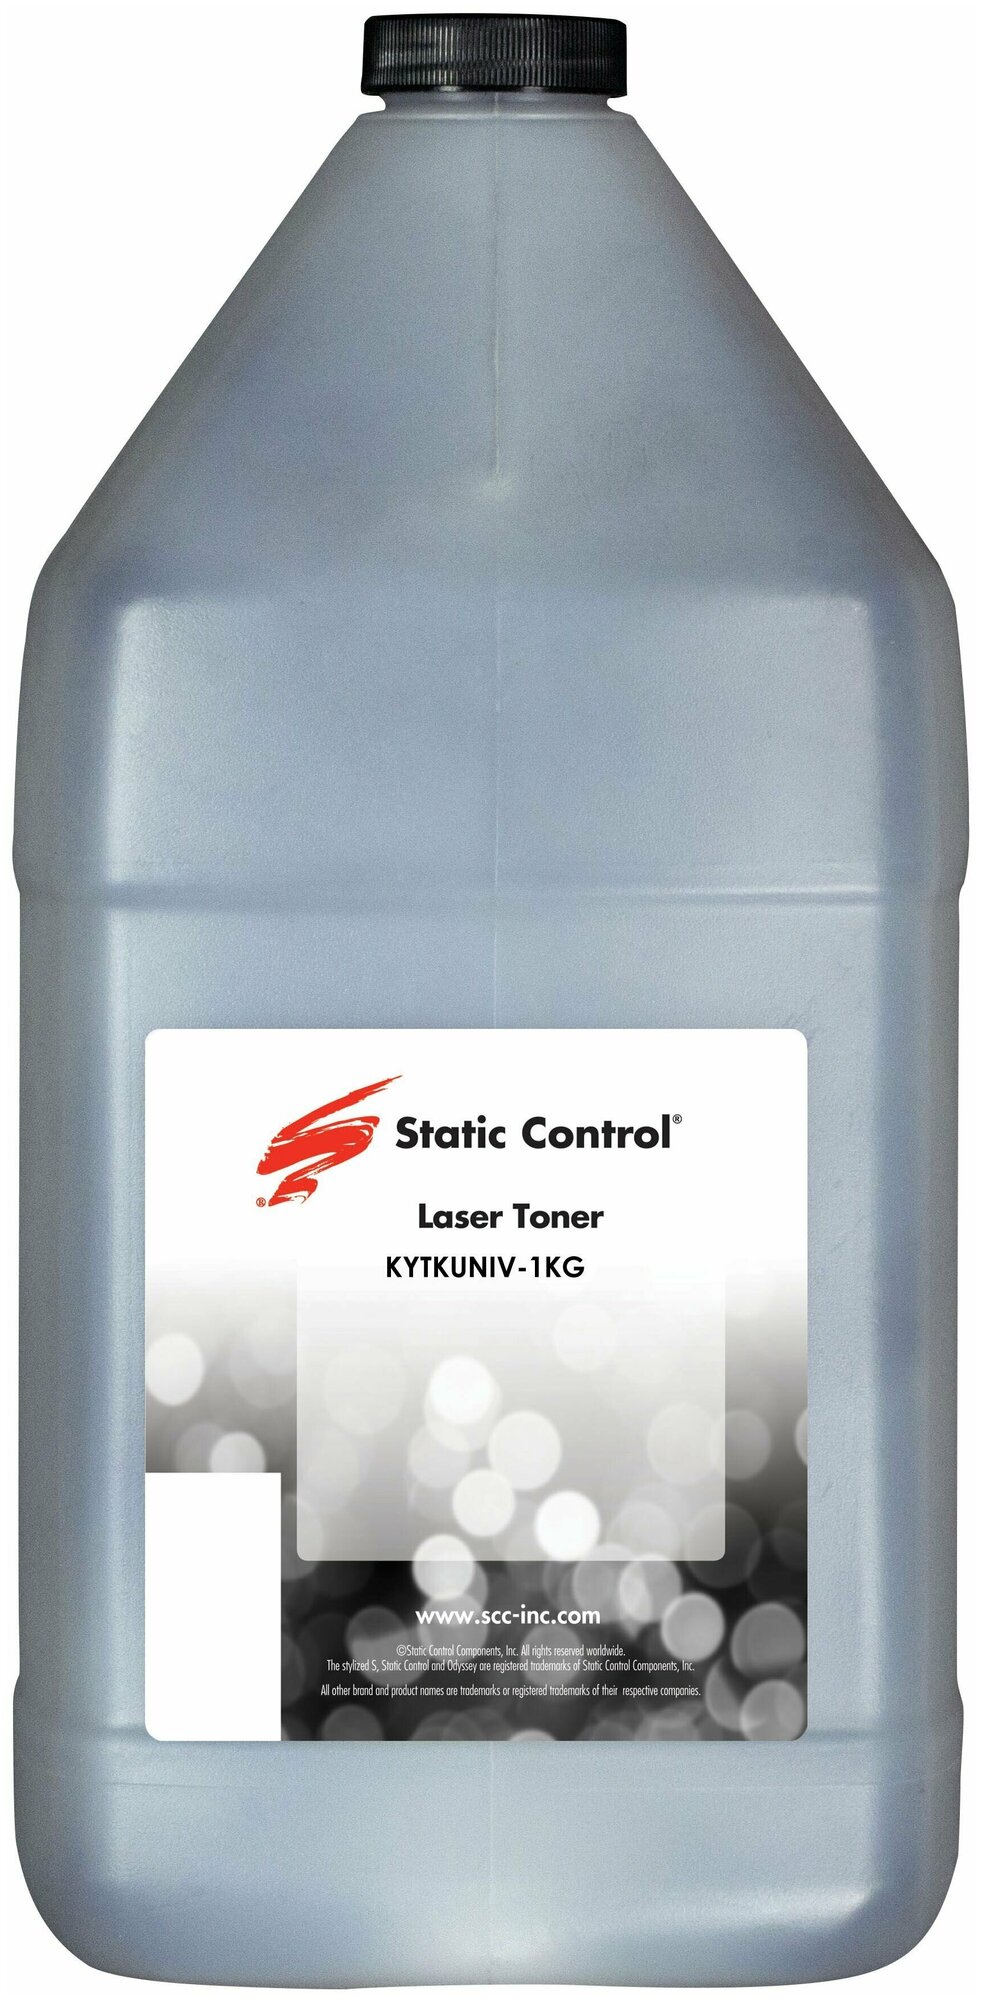 Static Control KYTKUNIV-1KG тонер (Kyocera Universal) черный 1000 гр (совместимый)